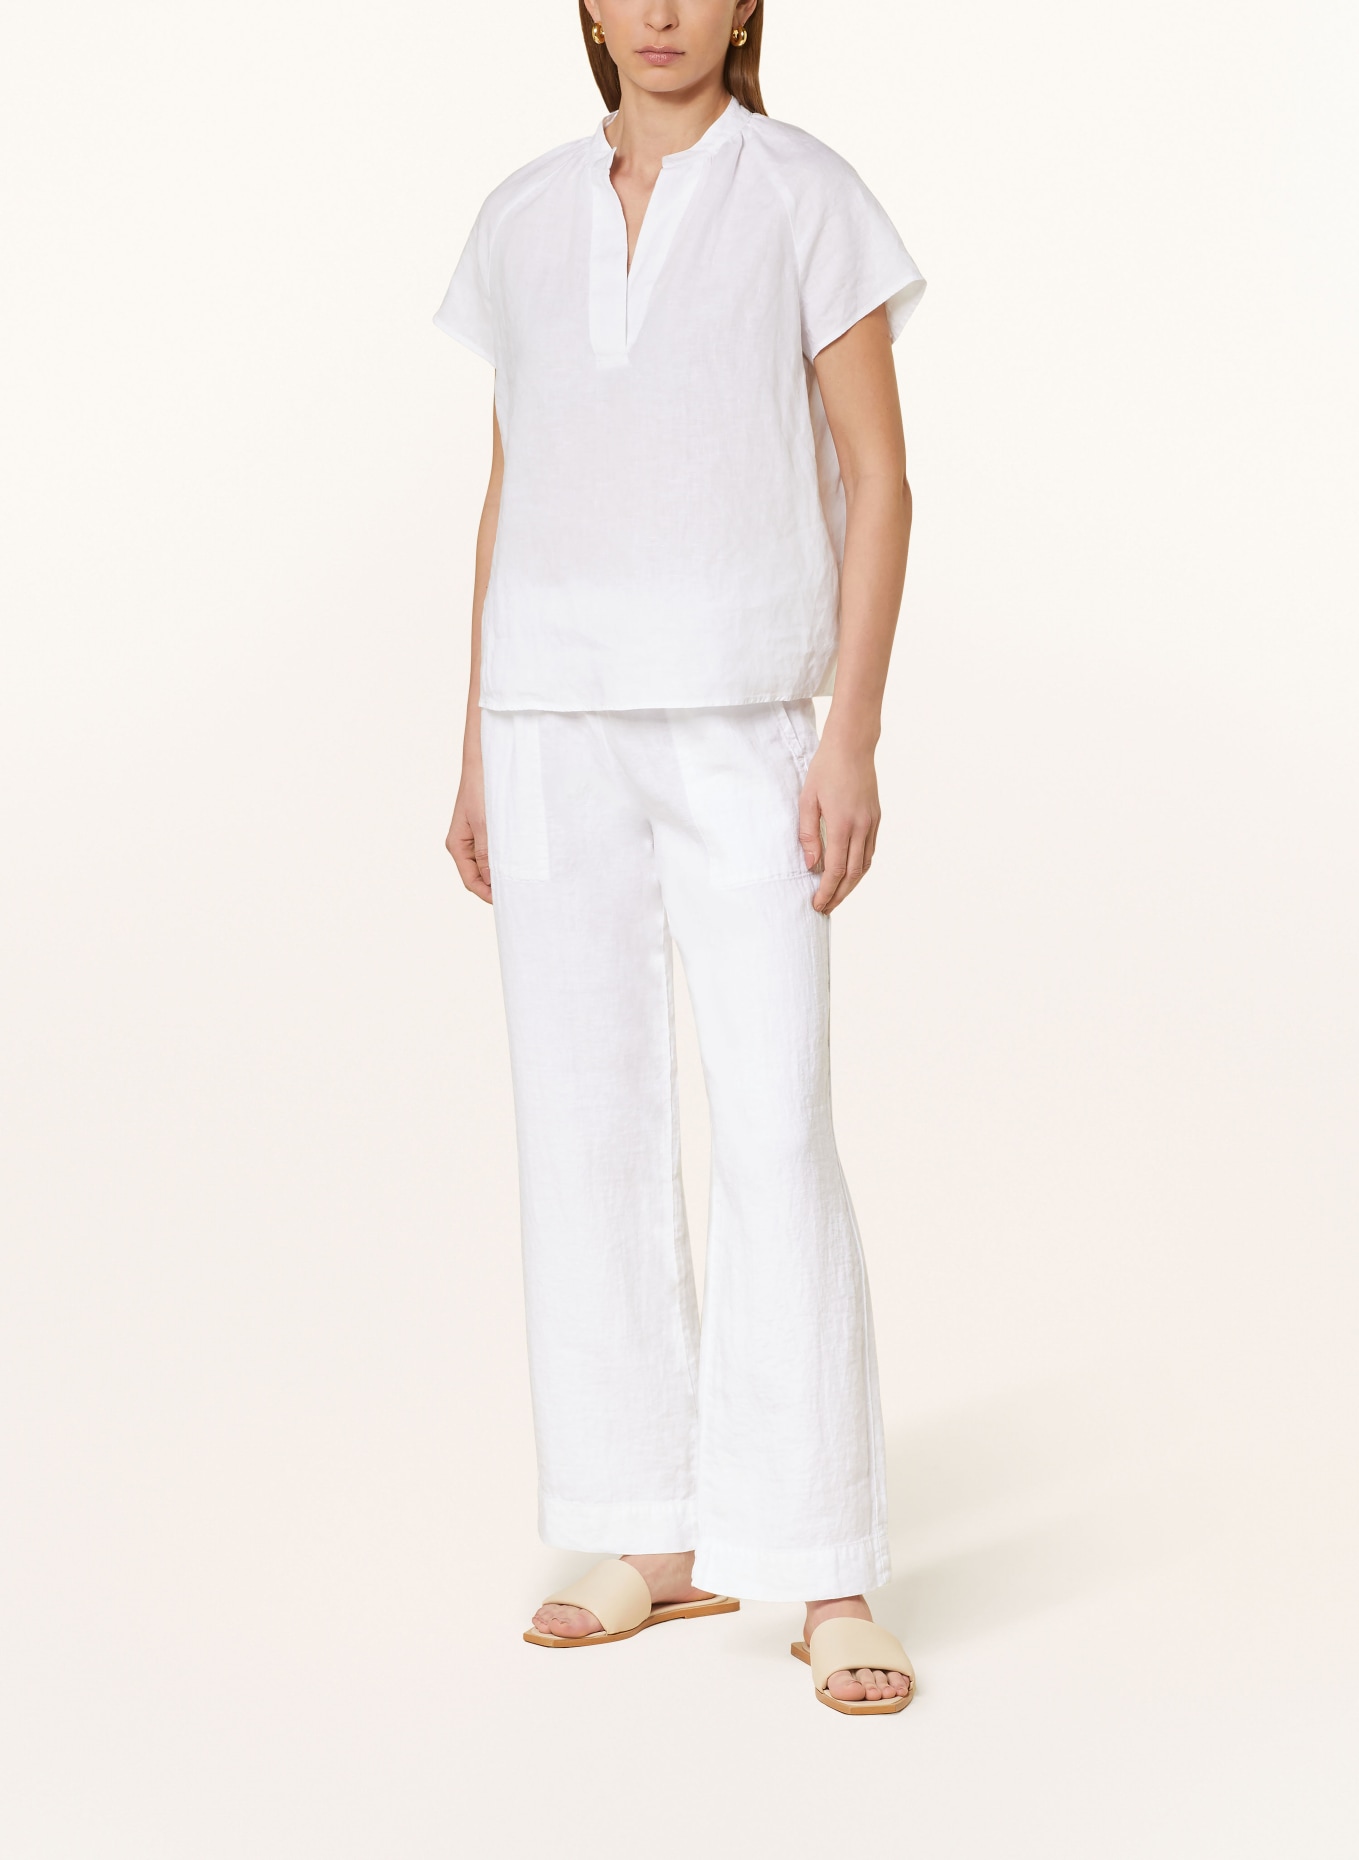 Marc O'Polo Shirt blouse made of linen, Color: WHITE (Image 2)